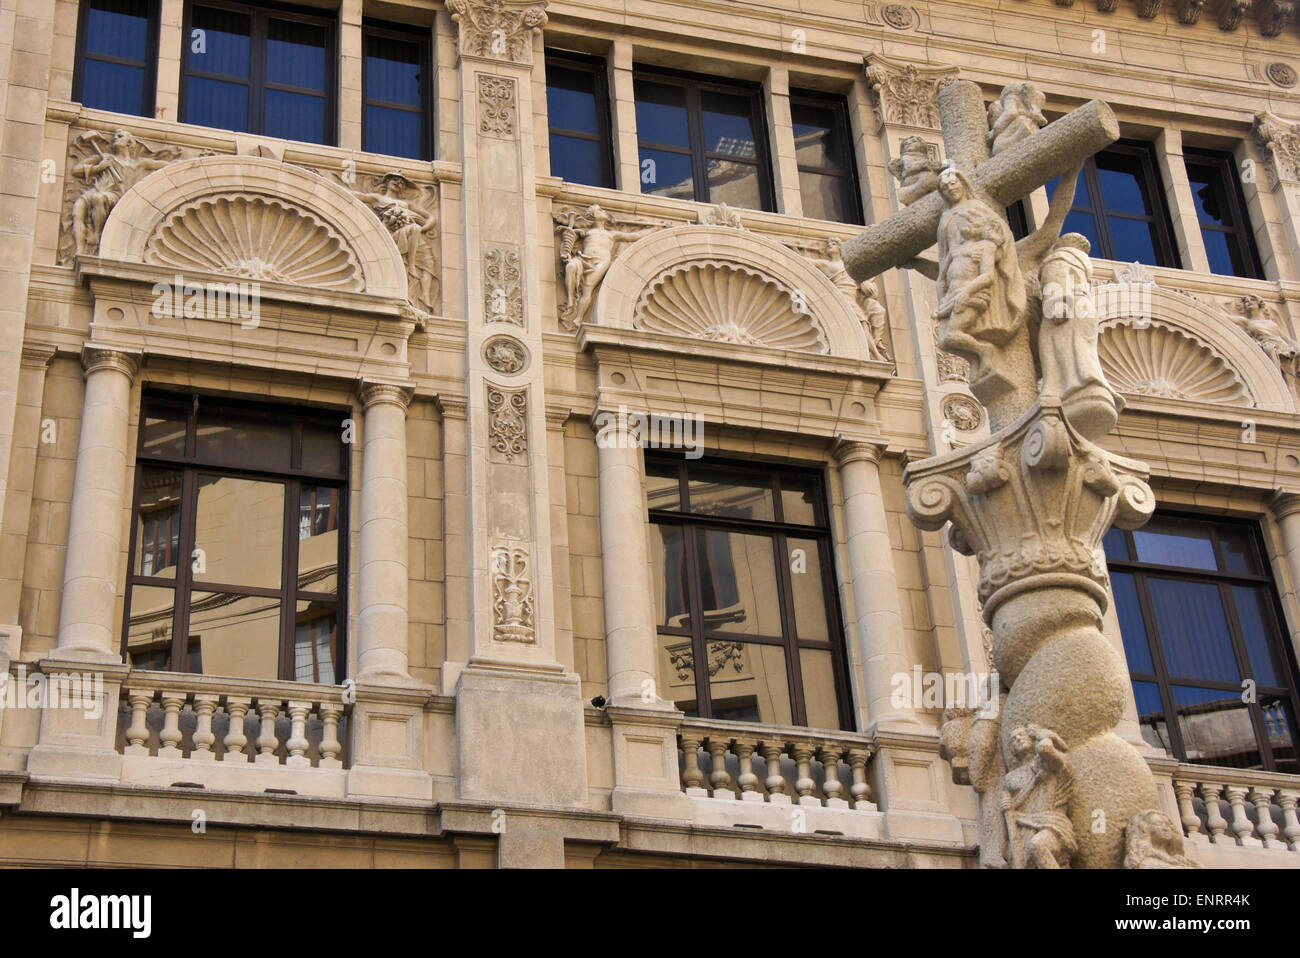 Fassade der Lonja del Comercio Büros und Skulptur in der Nähe von Plaza de San Francisco de Asis, Habana Vieja (Altstadt), Kuba Stockfoto